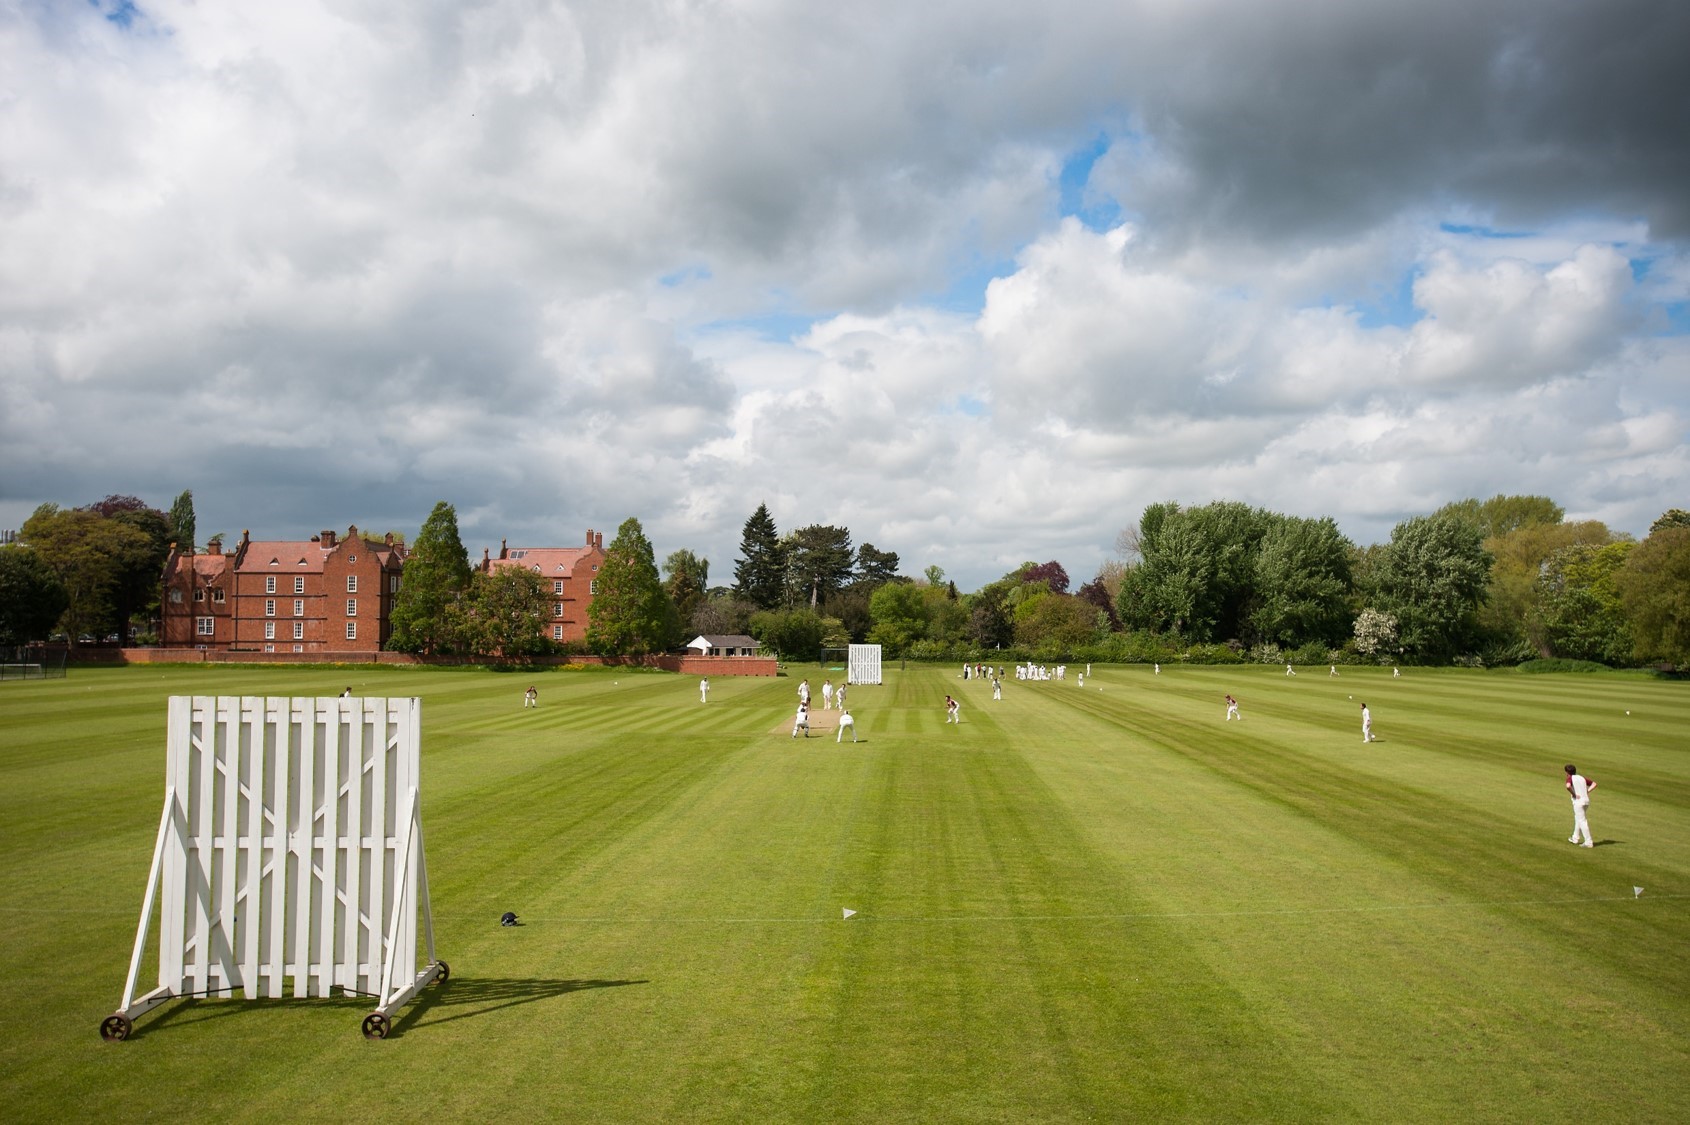 Cricket on the Weston Sports Ground